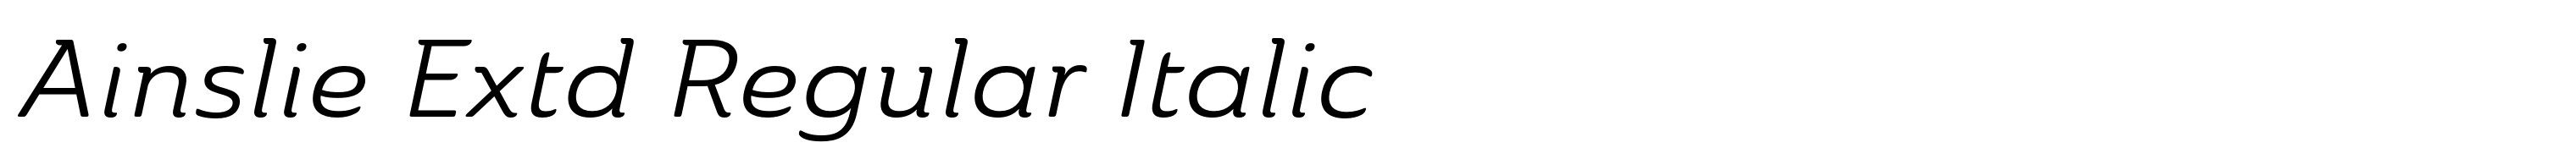 Ainslie Extd Regular Italic